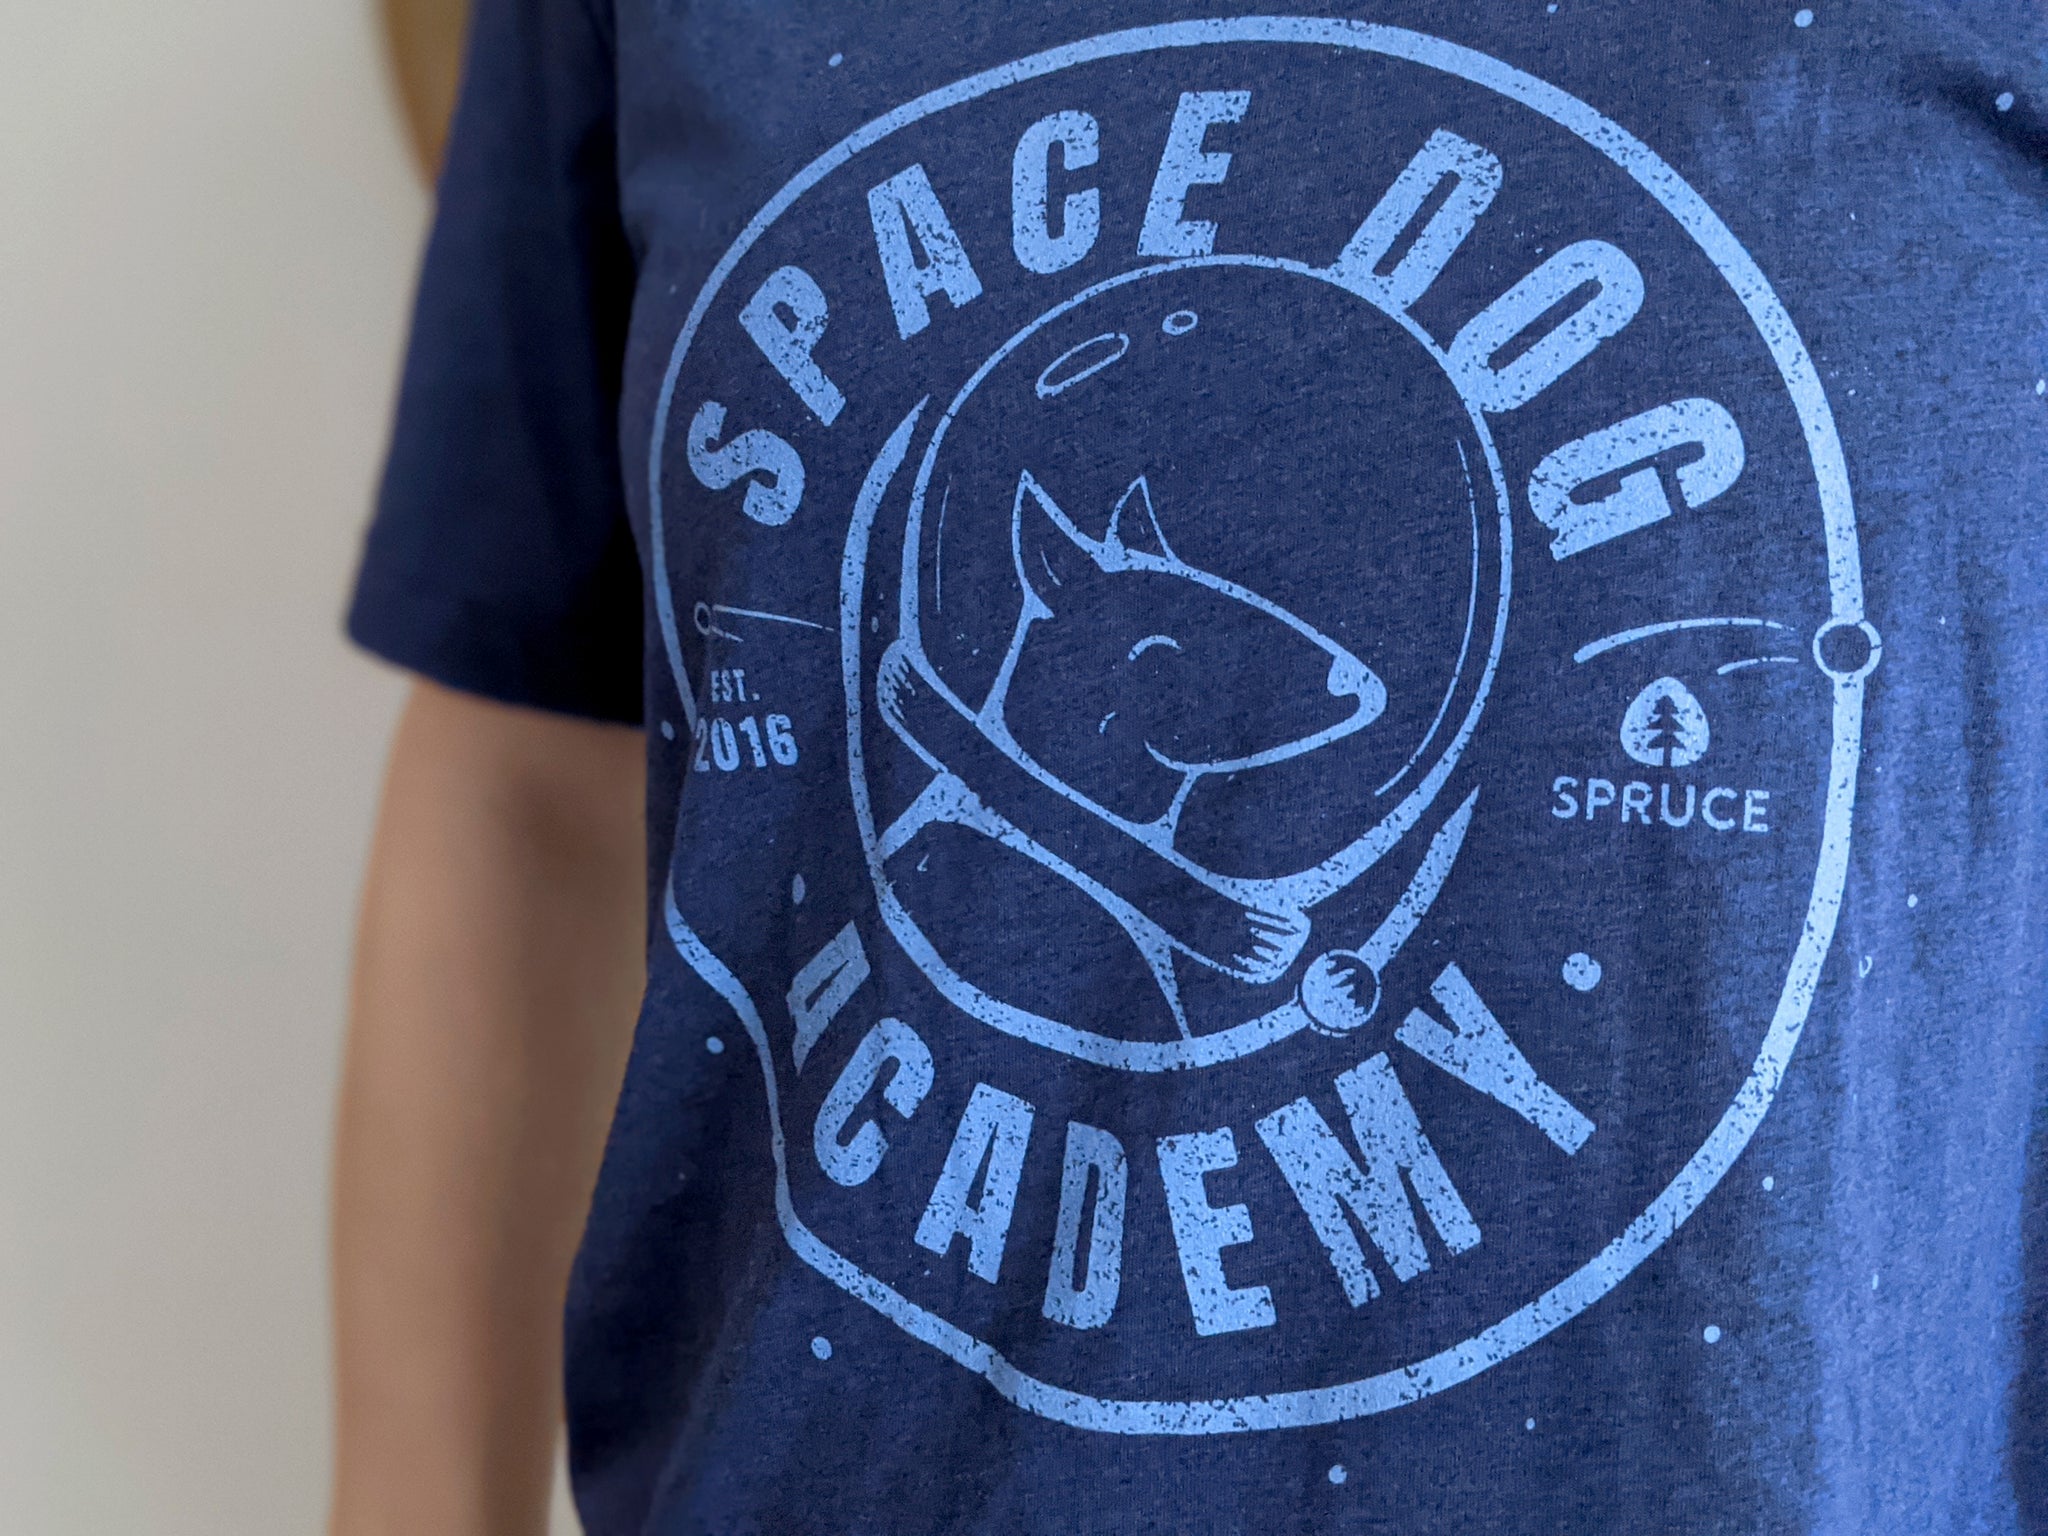 Space Dog Academy t-shirt